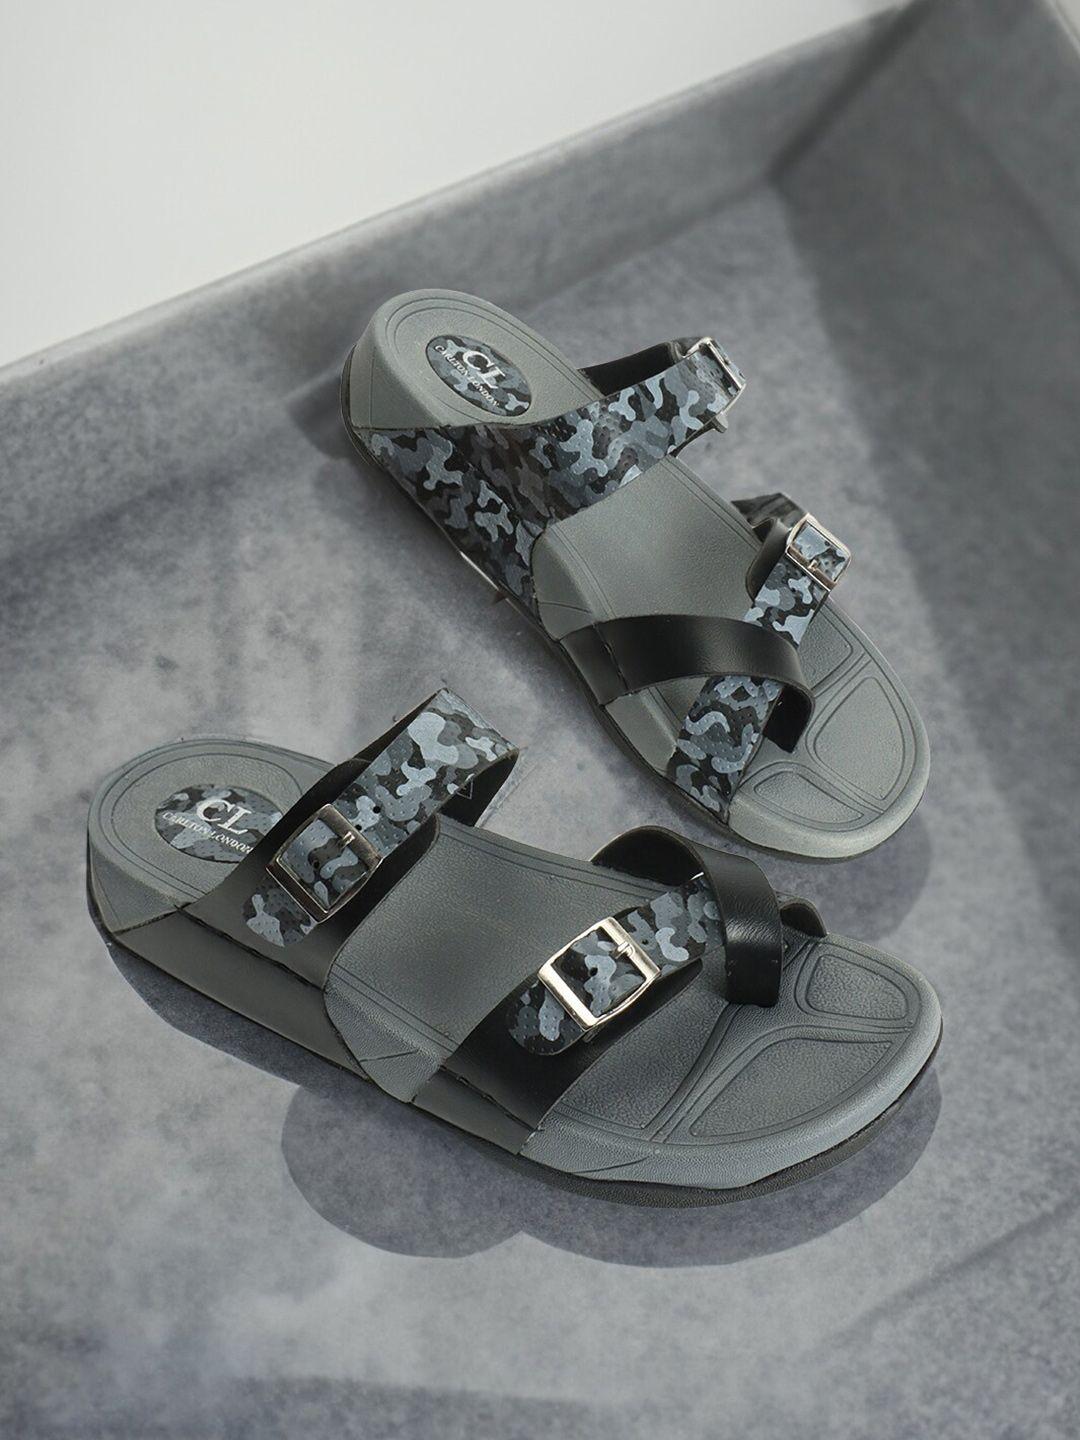 carlton london printed buckle detailed open toe comfort sandals